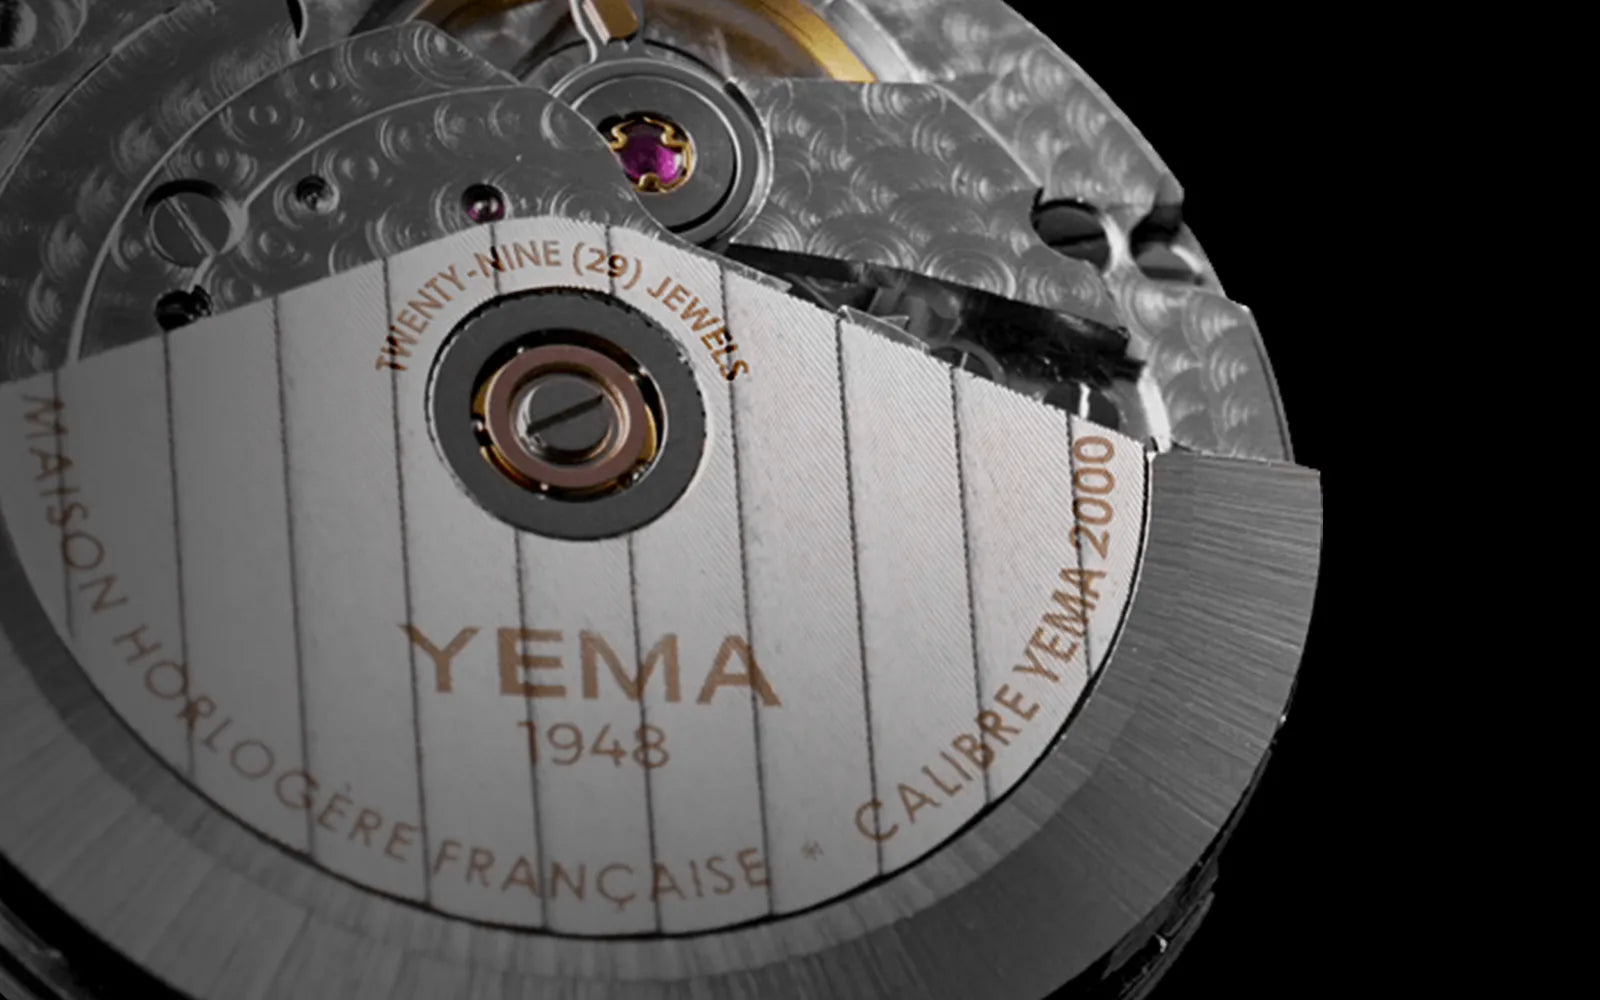 montre yema yachtingraf vintage